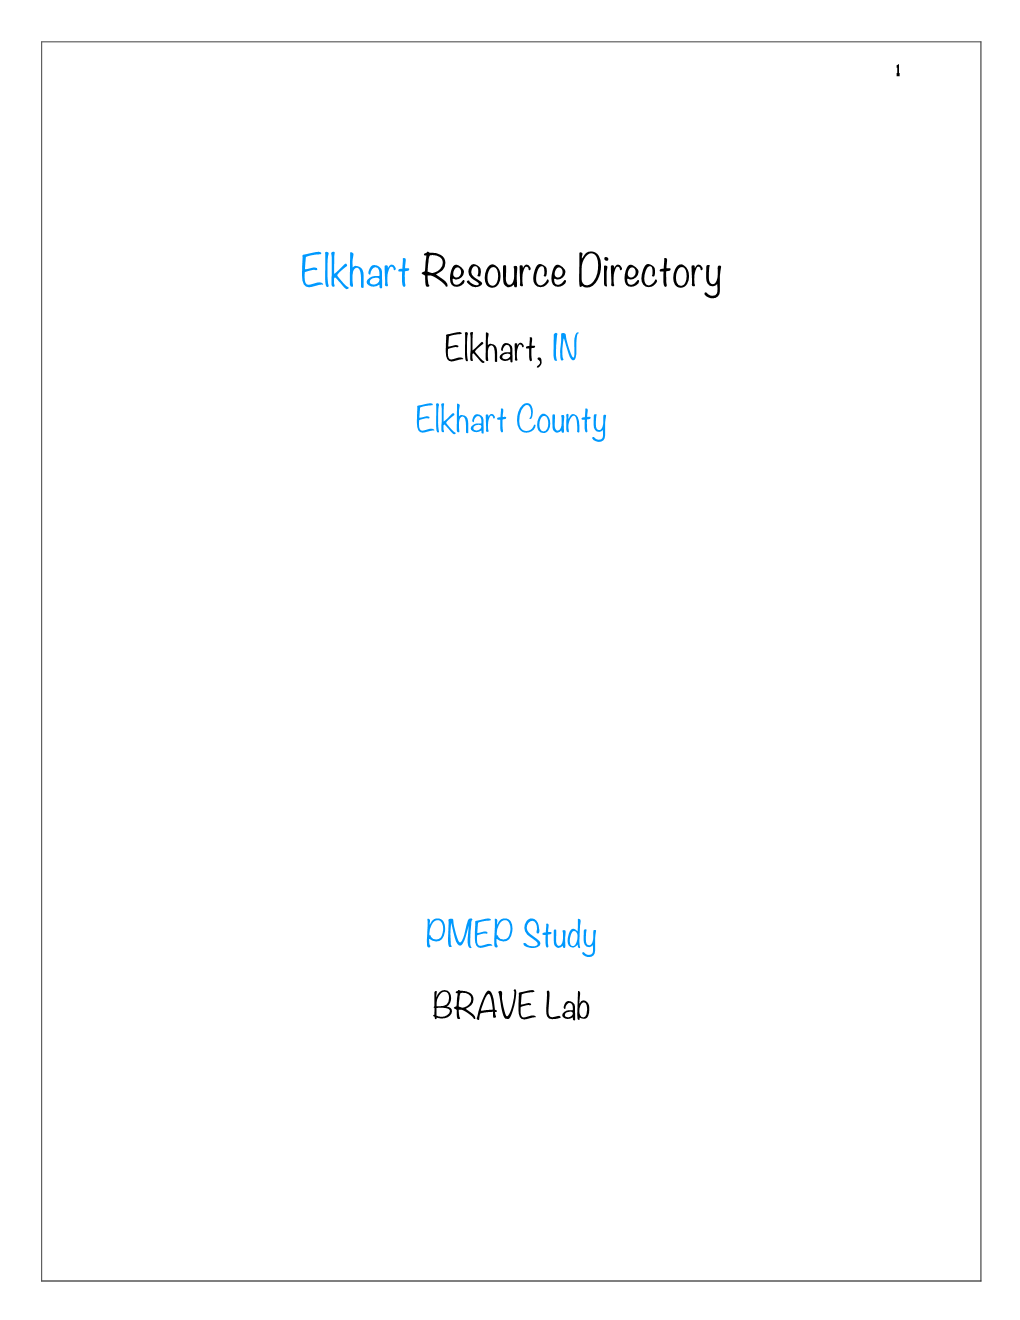 Elkhart Resource Directory